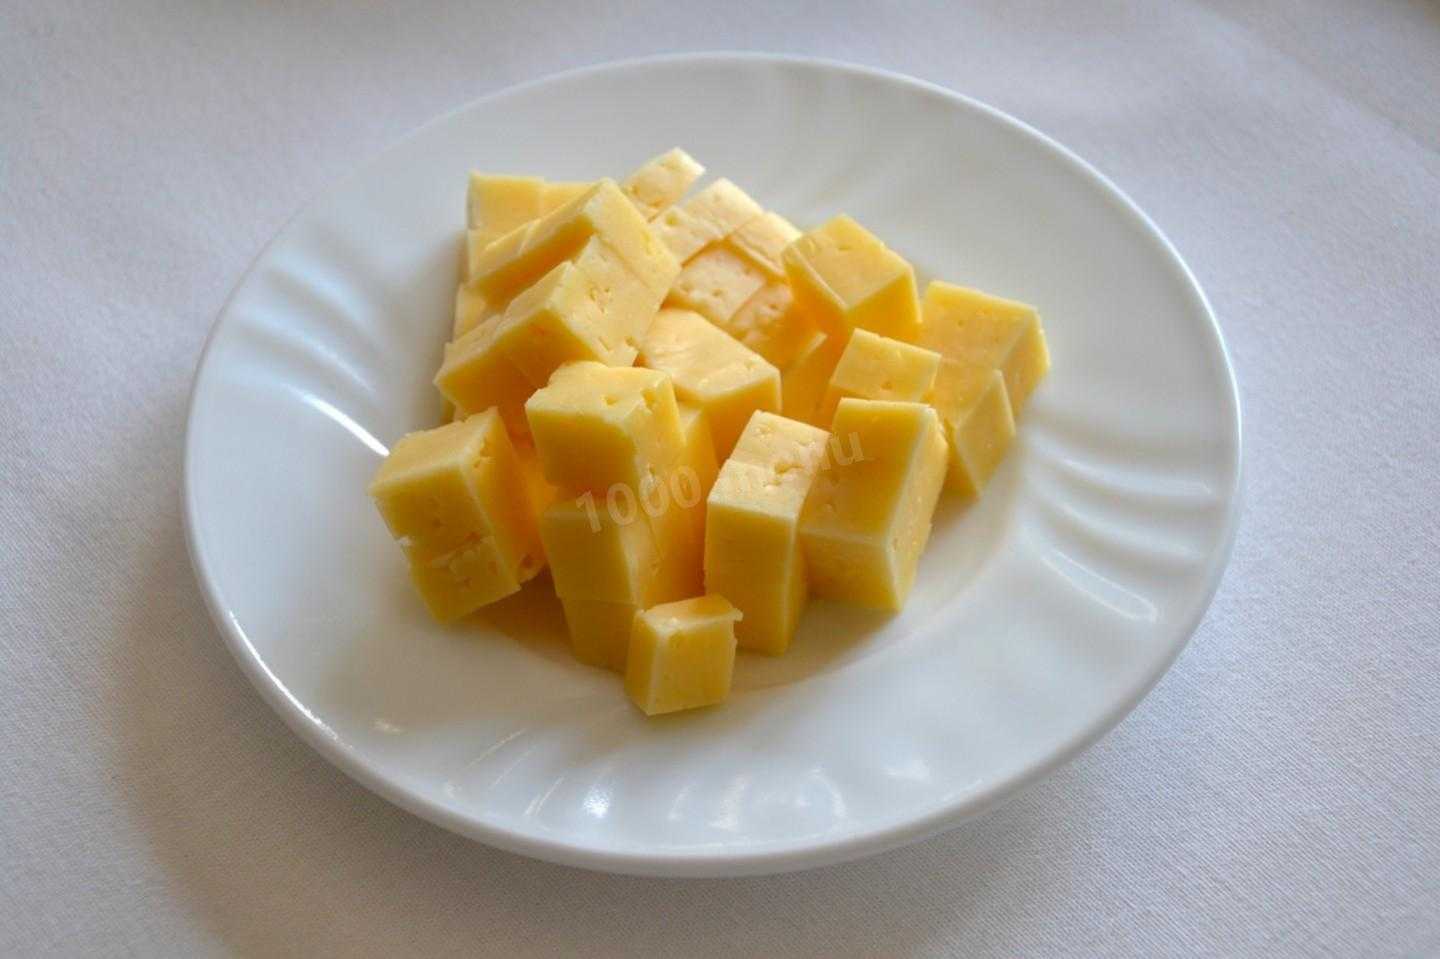 Нарезать квадратиками. Сыр кубиками. Сыр нарезанный кубиками. Сыр кубиками нарезка. Нарезанный кубиками пармезан.